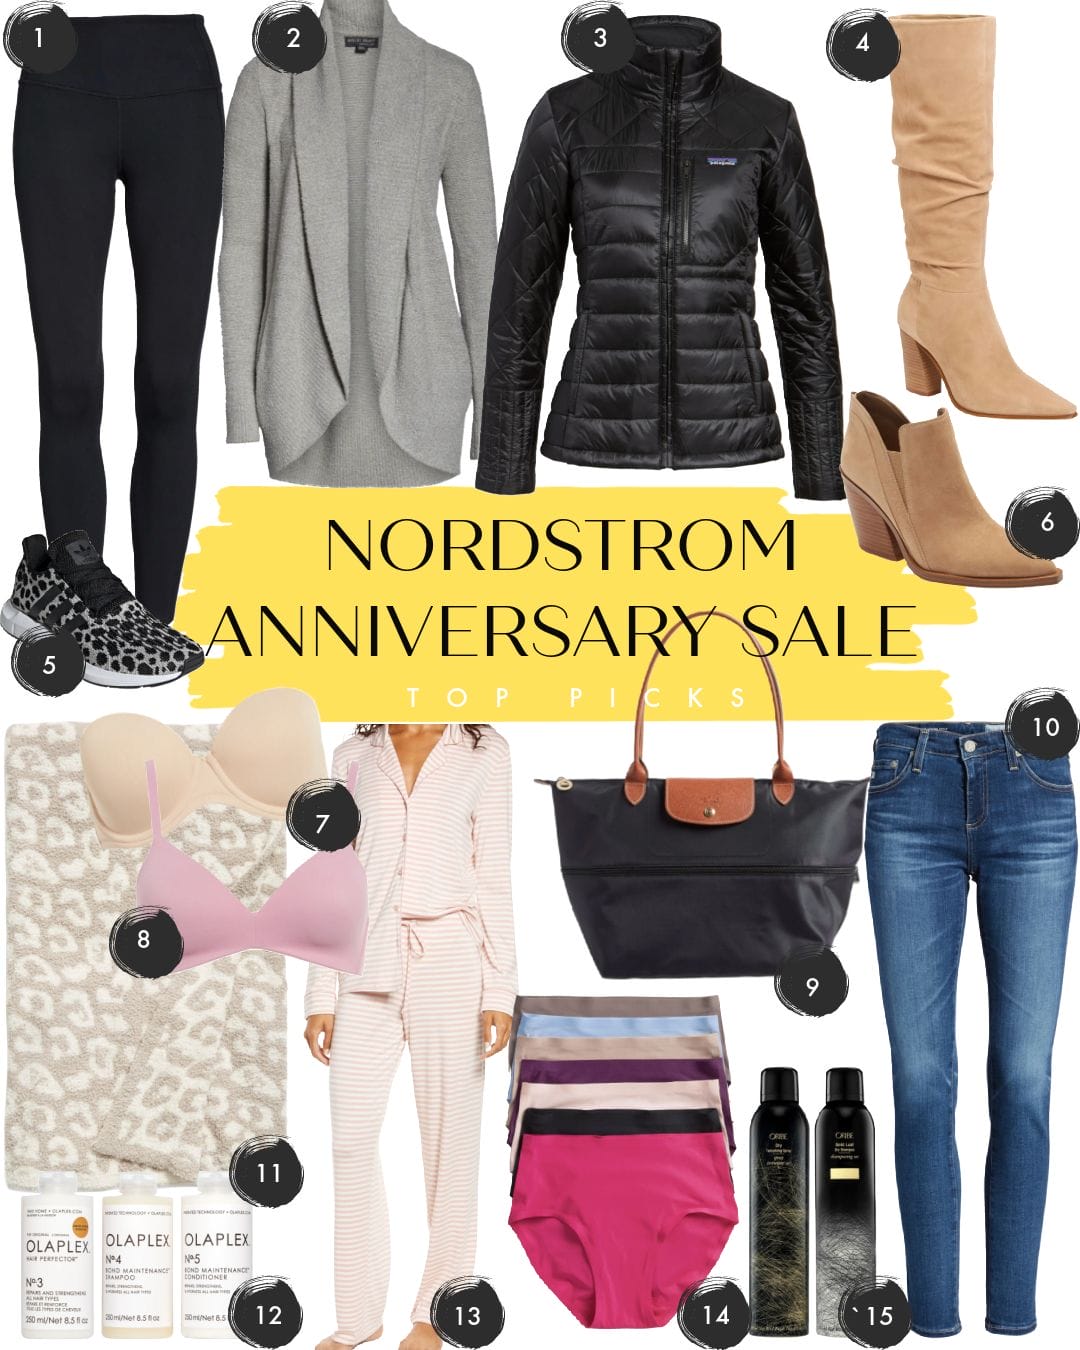 Nordstrom Anniversary Sale - Top Picks